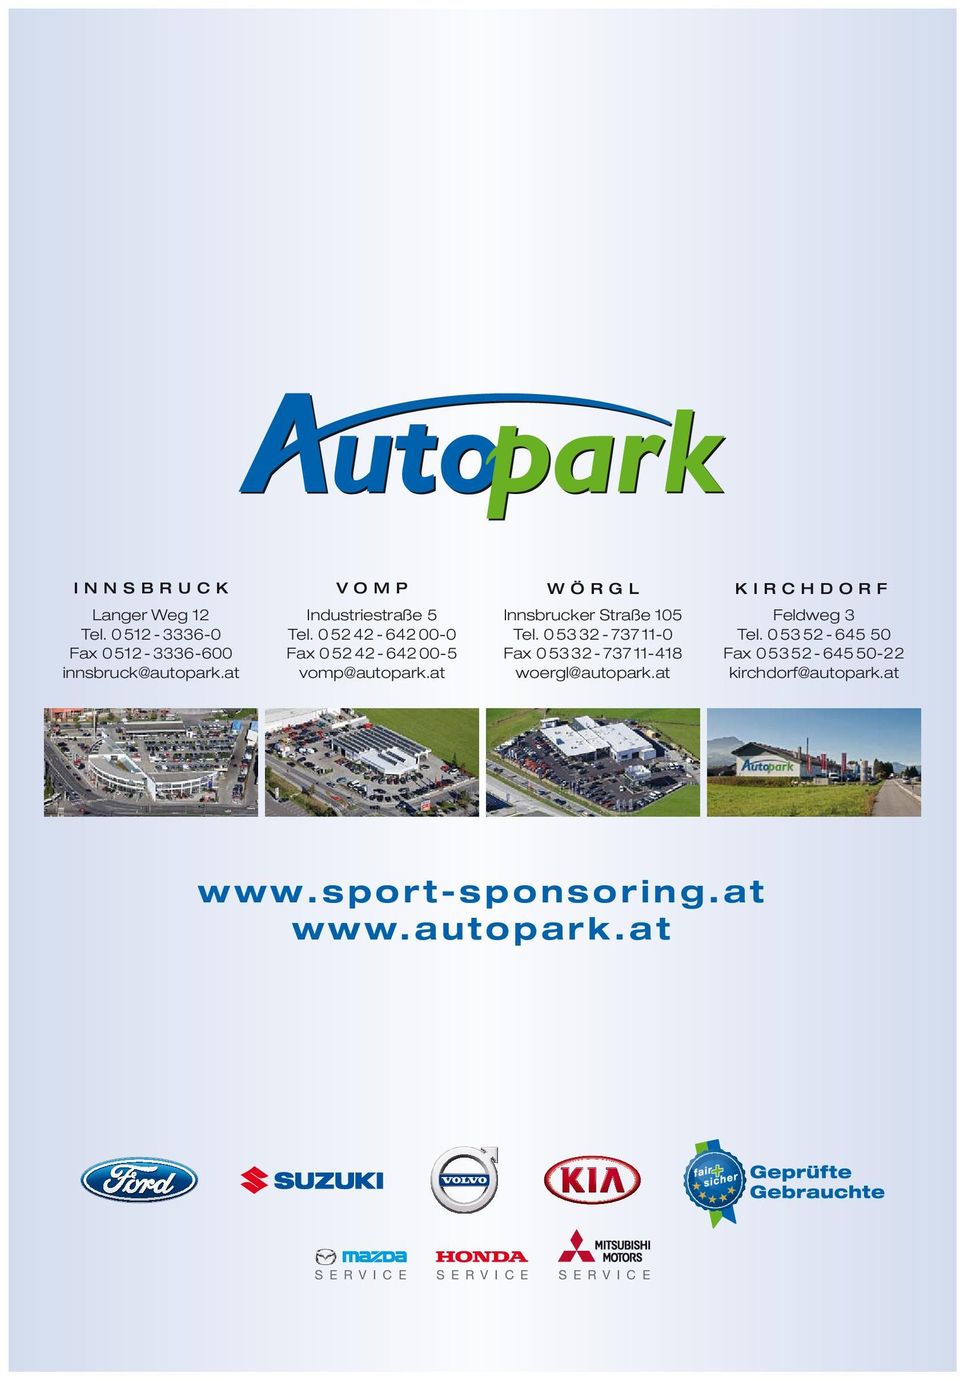 0 52 42-642 00-0 Fax 0 52 42-642 00-5 vomp@autopark.at Innsbrucker Straße 105 Tel.